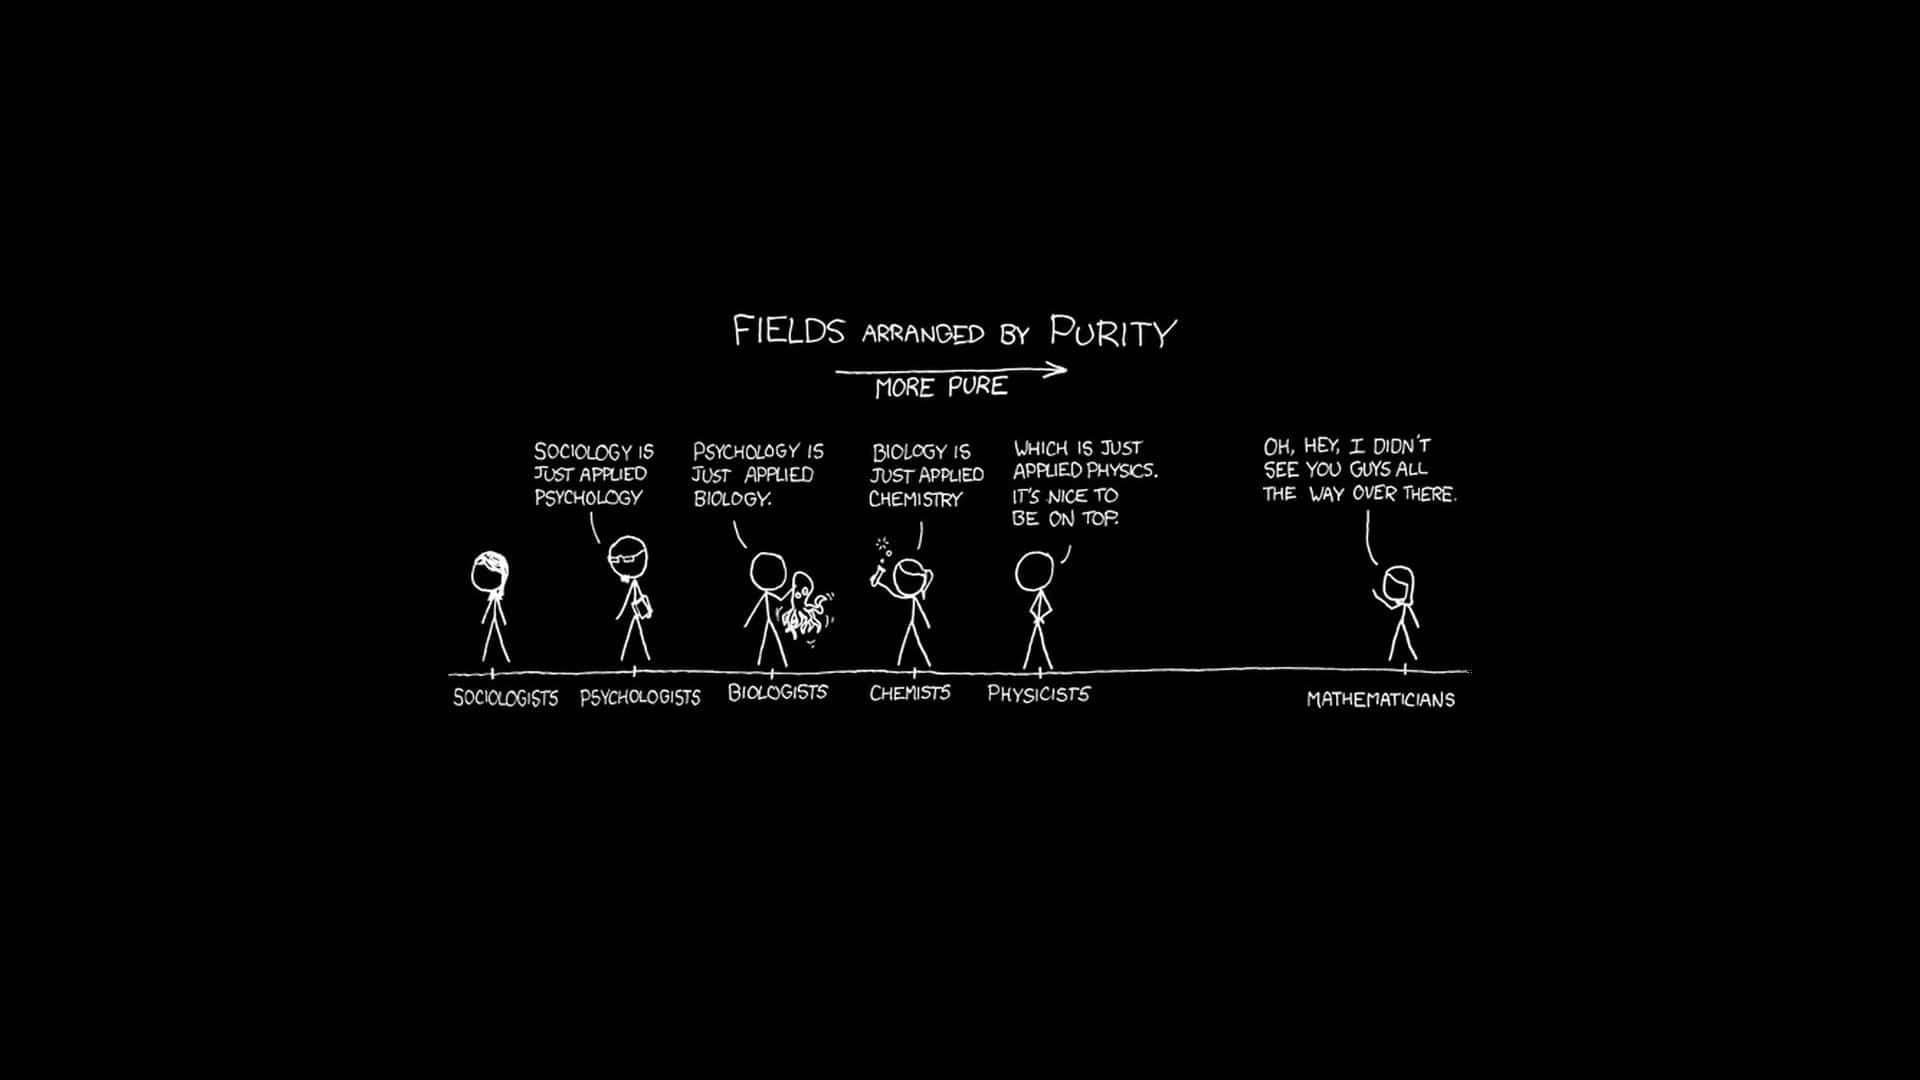 Fieldsof Science Purity Hierarchy Wallpaper